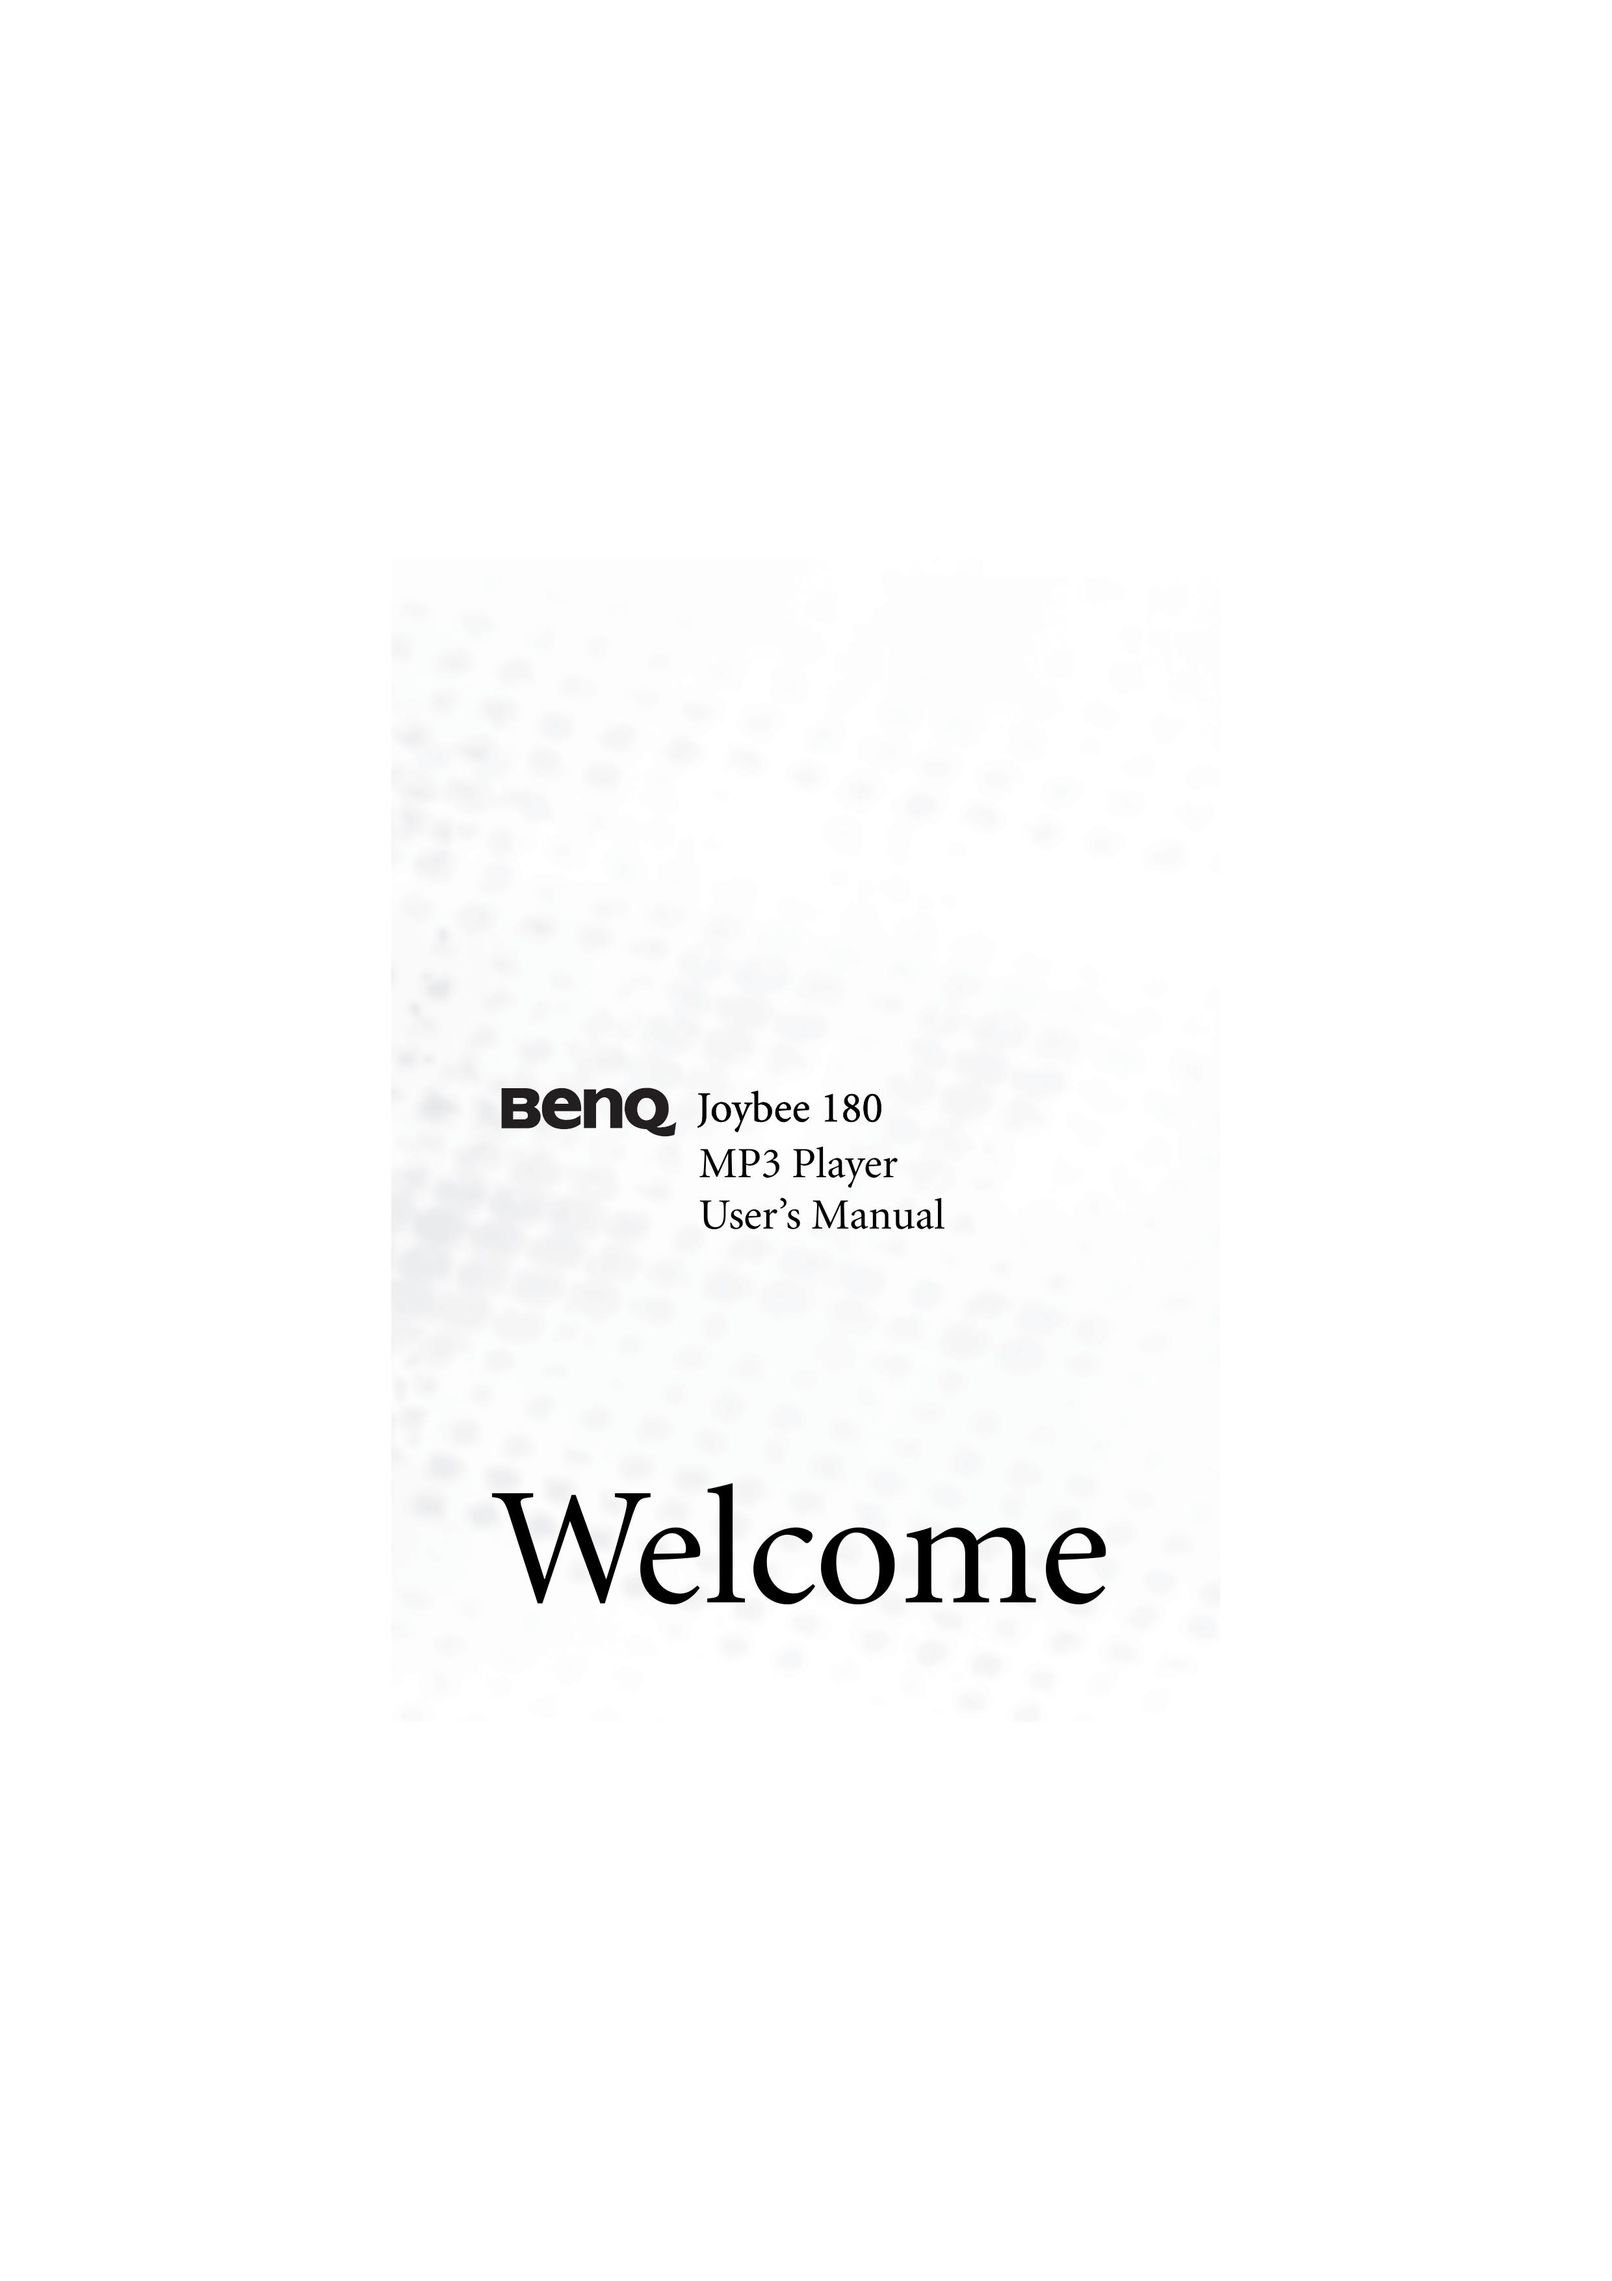 BenQ 180 MP3 Player User Manual